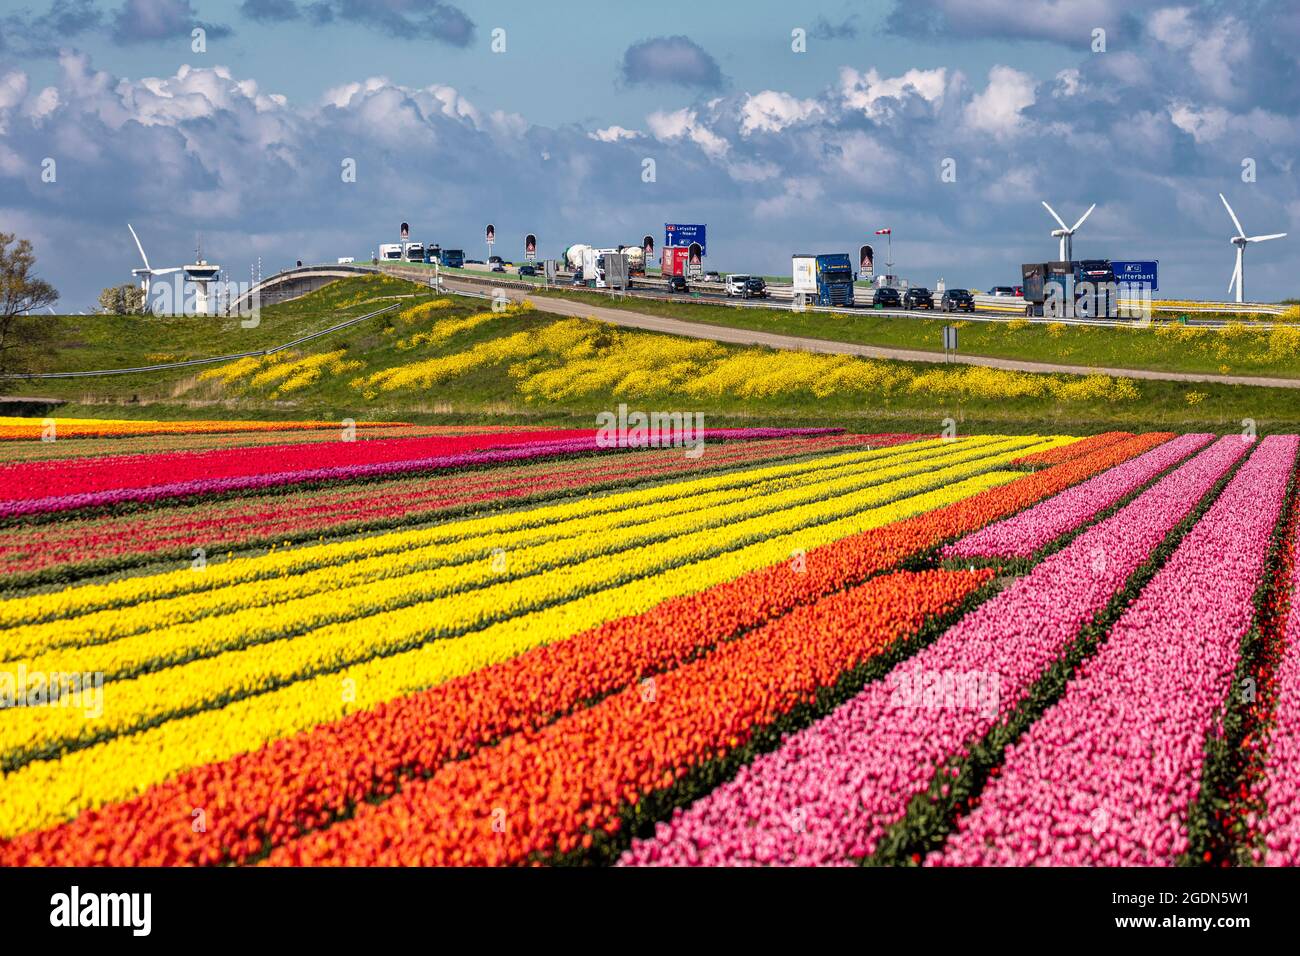 The Netherlands, Nagele, Trucks and cars on highway A6 near Ketekbrug, Ketel Bridge. Flowering tulip fields. Spring, wind turbines. Stock Photo